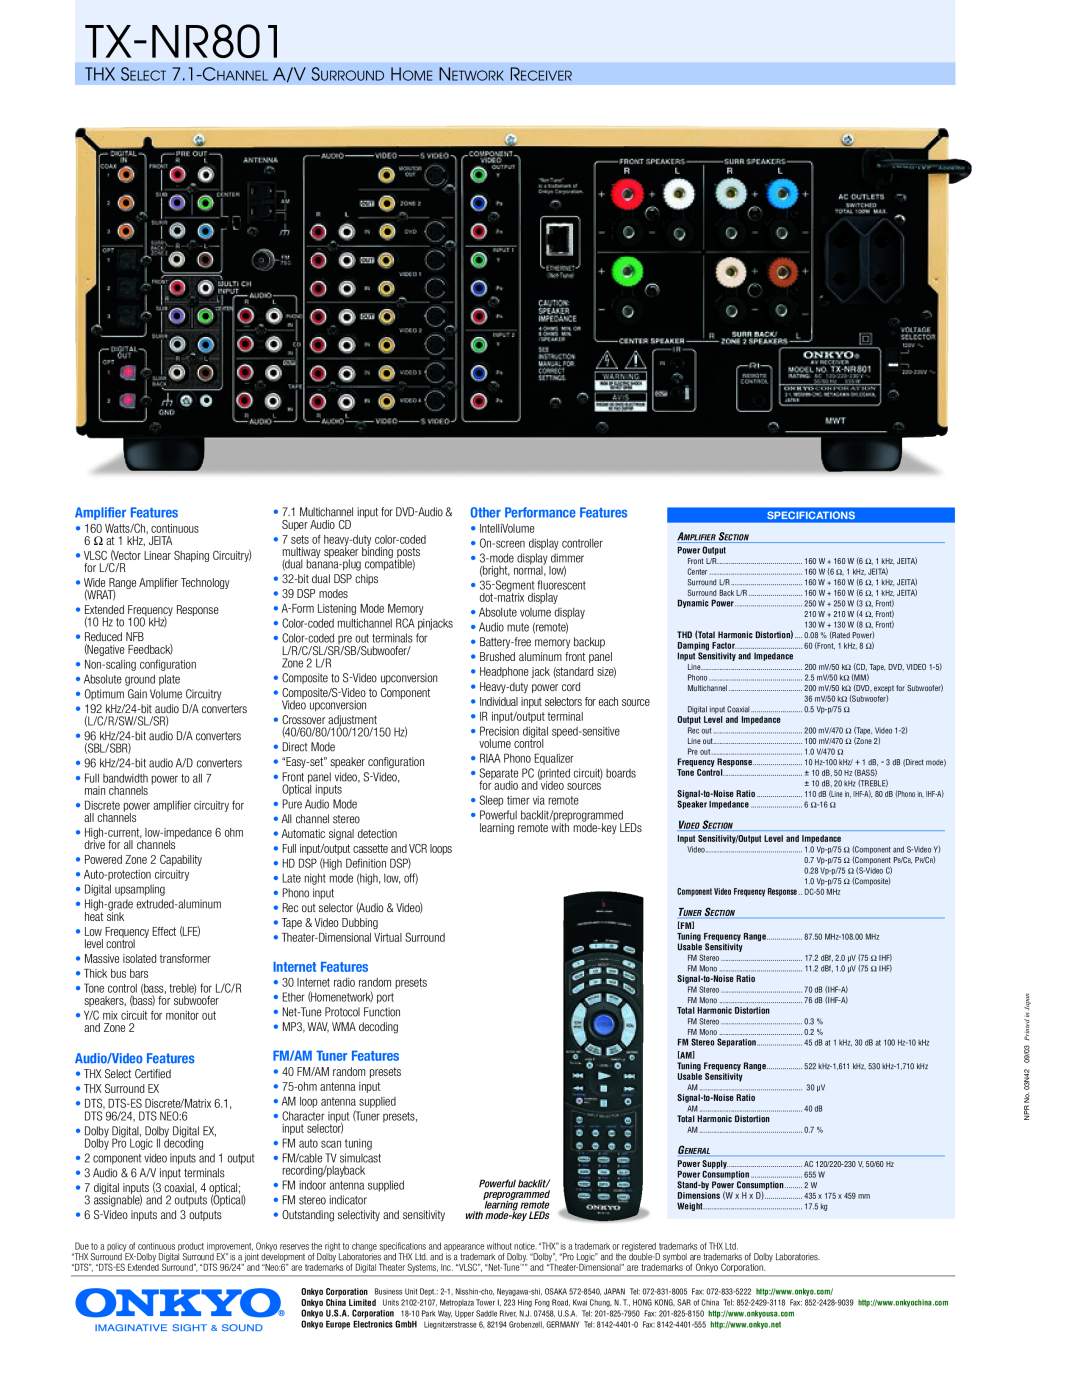 Onkyo TX-NR801 manual Amplifier Features, Audio/Video Features, Internet Features, FM/AM Tuner Features 